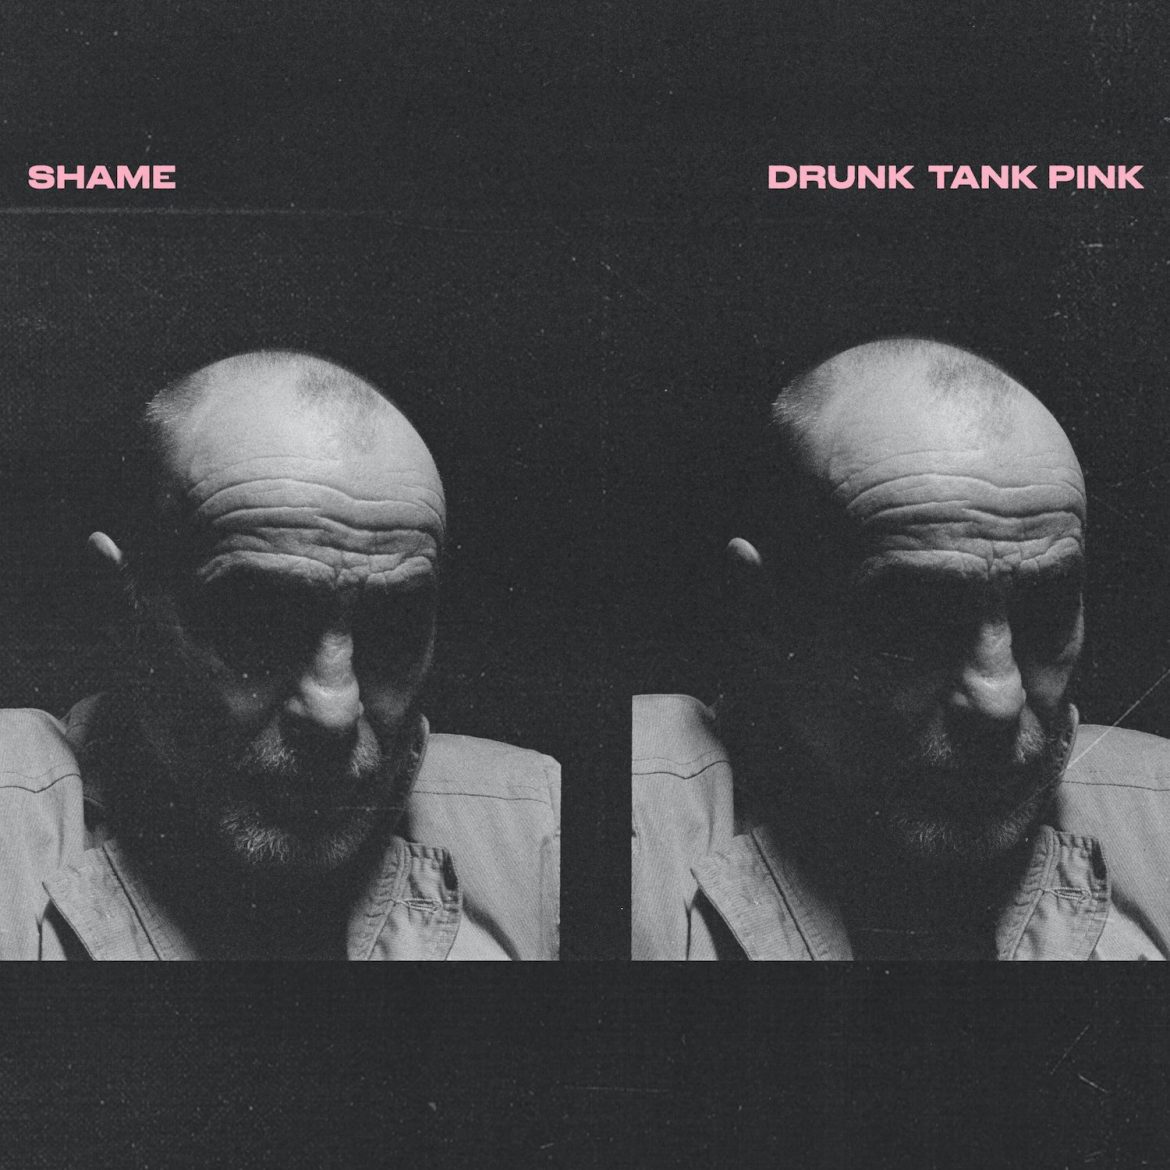 Drunk Tank Pink - Shame